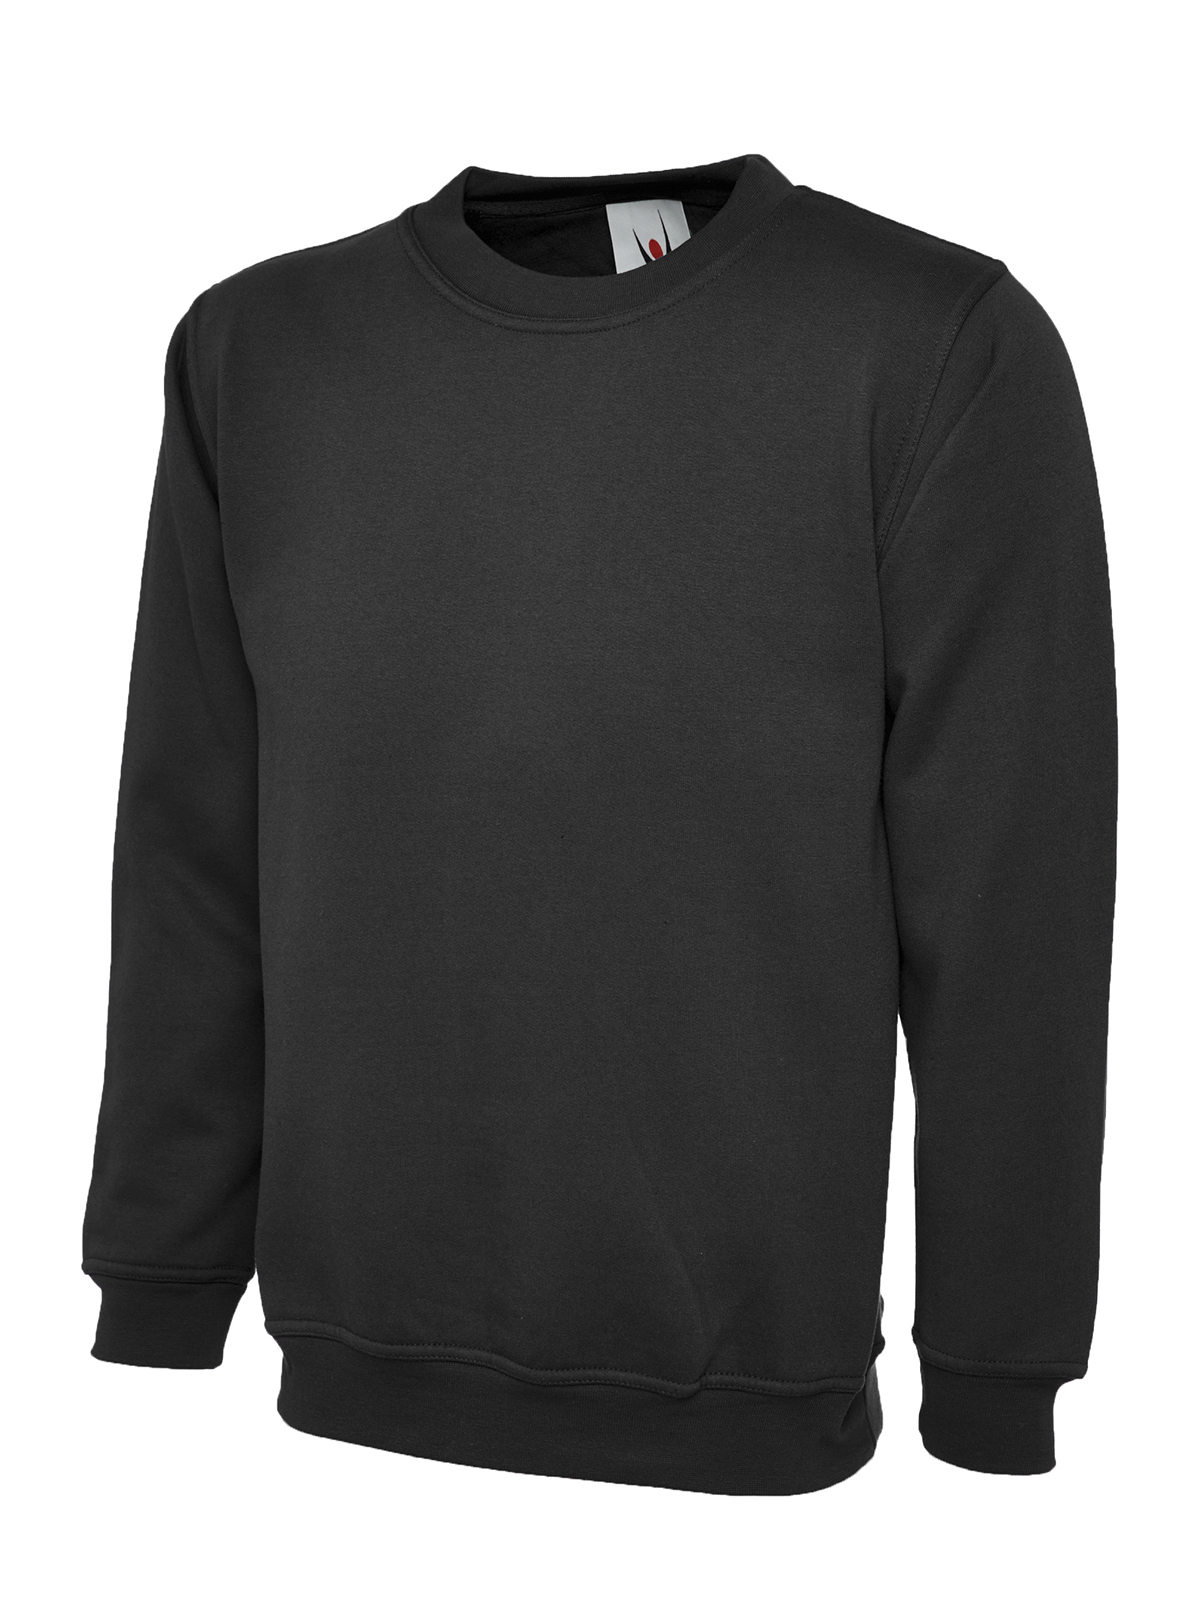 Uc203 300gsm classic sweatshirt - black - 2xl